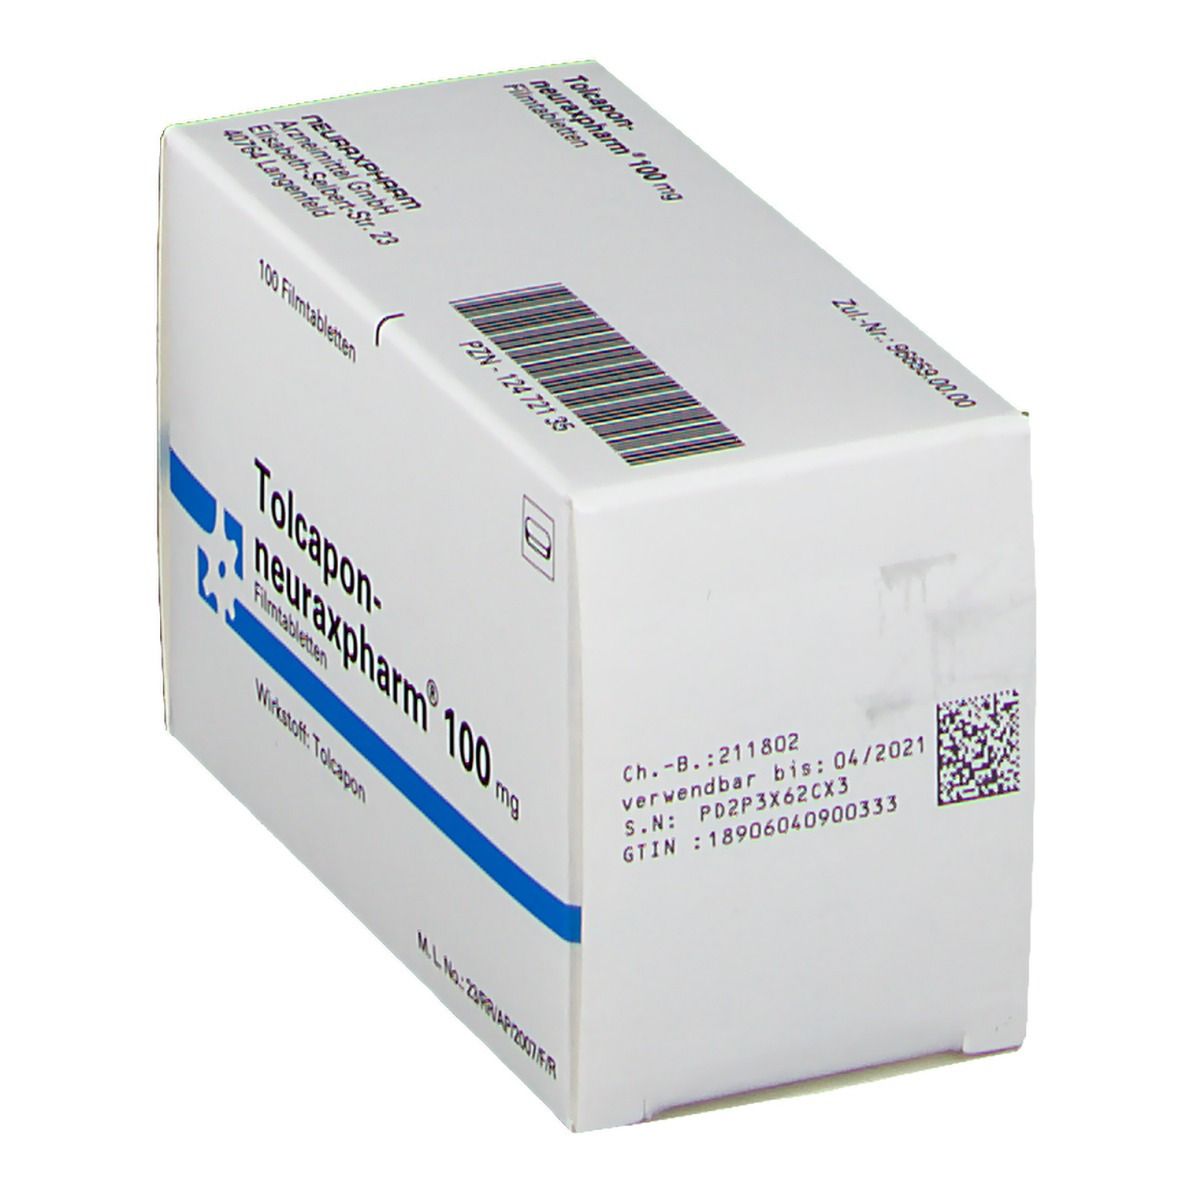 Tolcapon-neuraxpharm® 100 mg